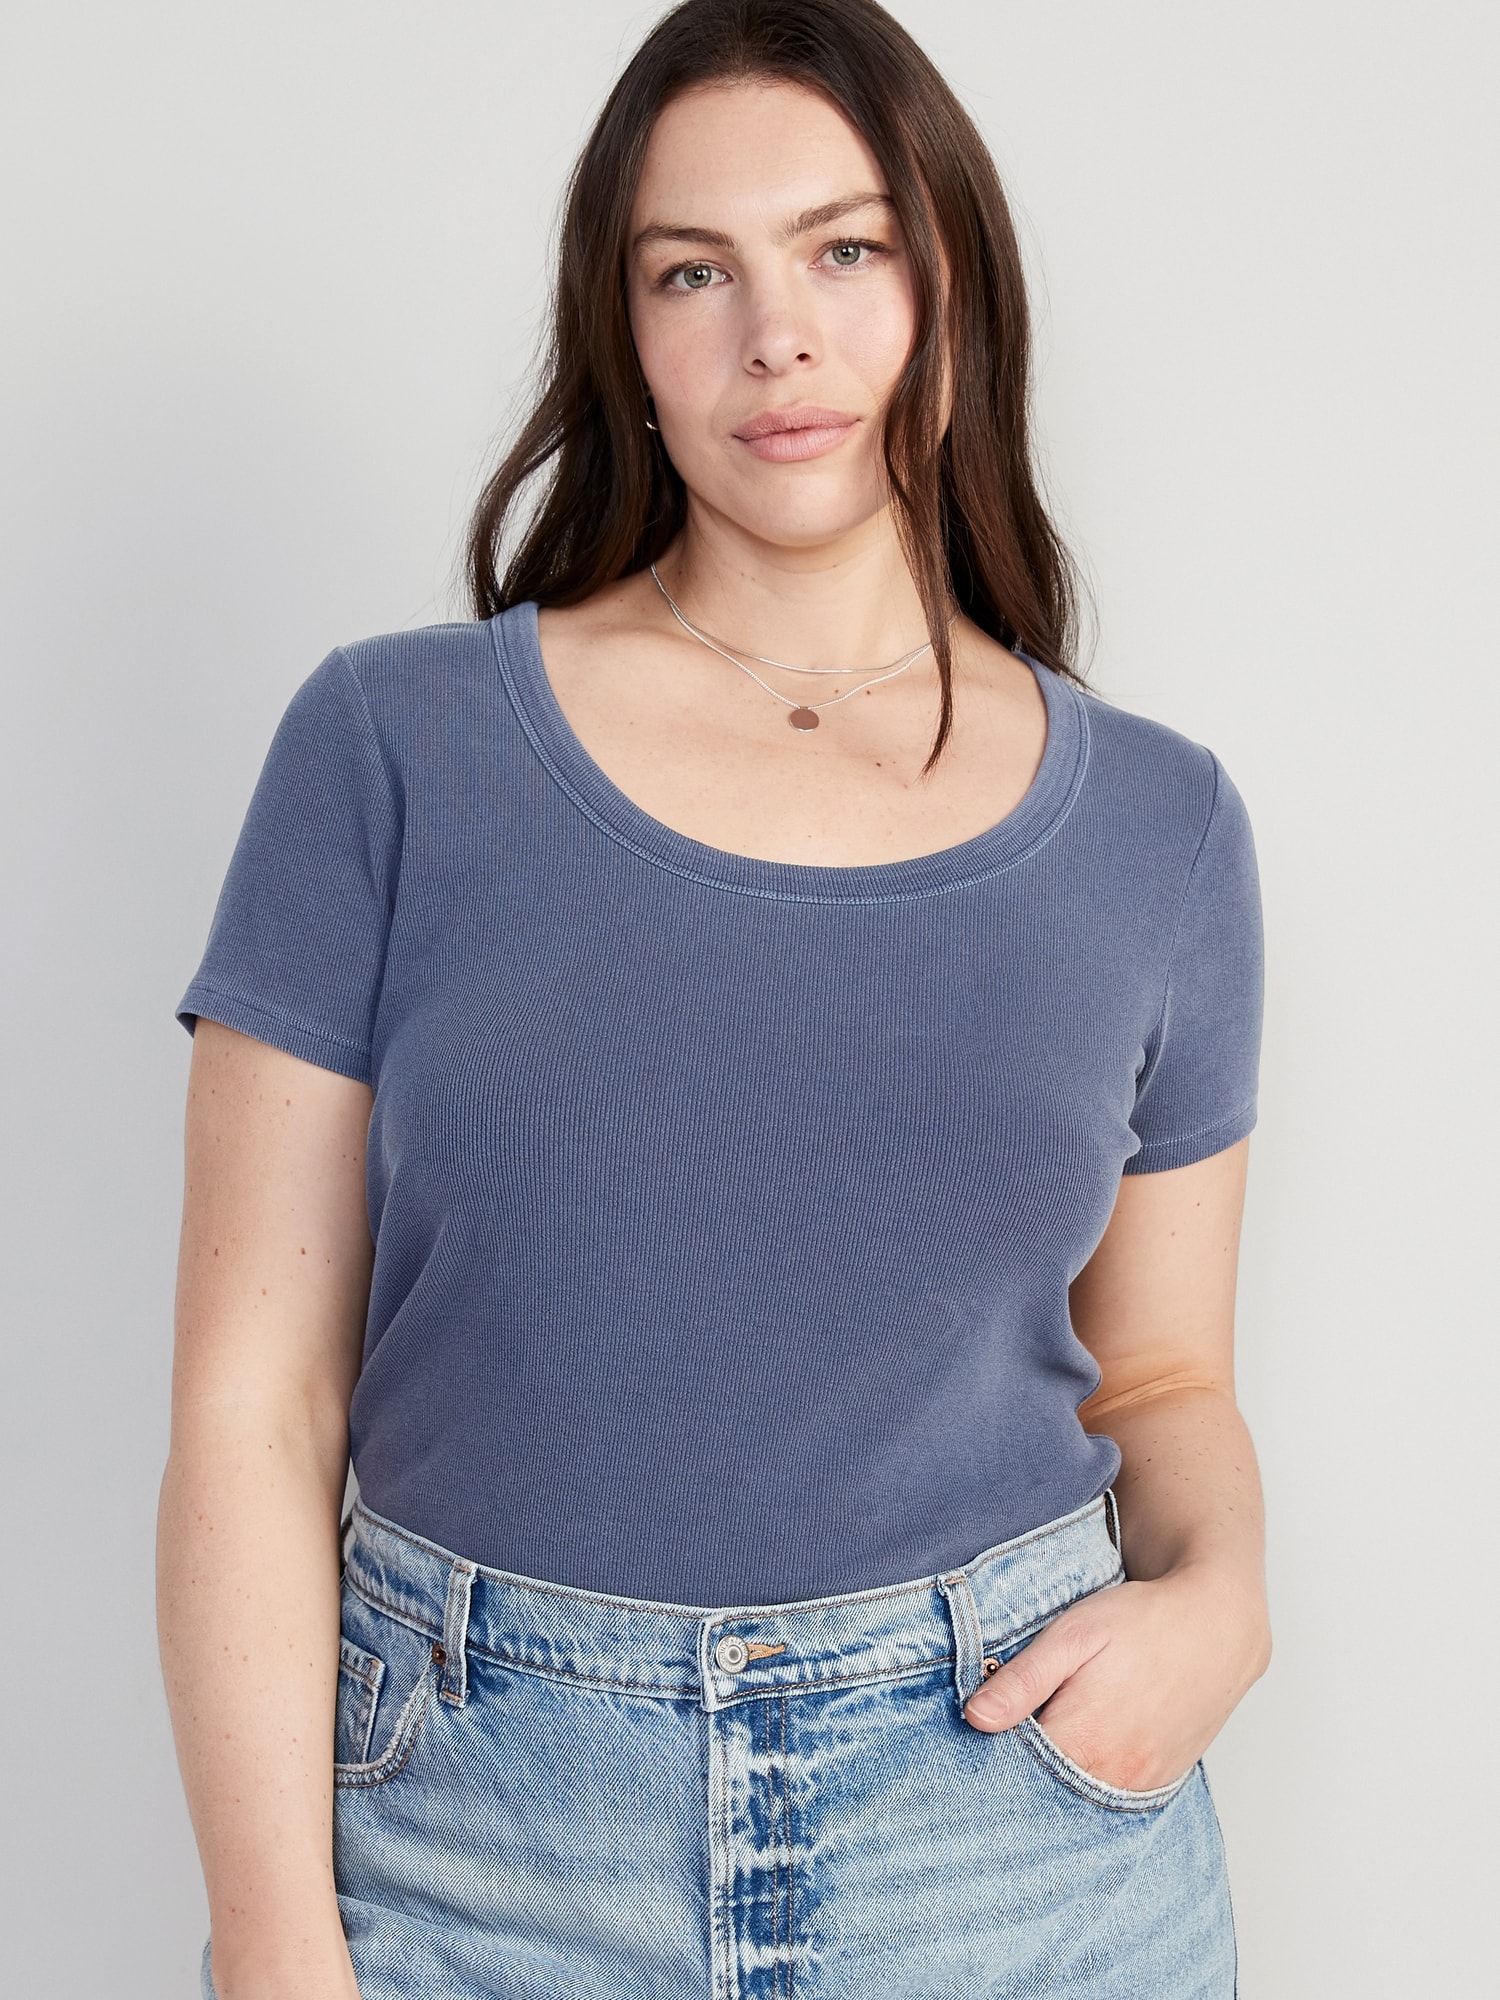 Women's Short Sleeve Cut Out Cold Shoulder Tops Deep V Neck T Shirts,navy  blue,2xl,F116088 